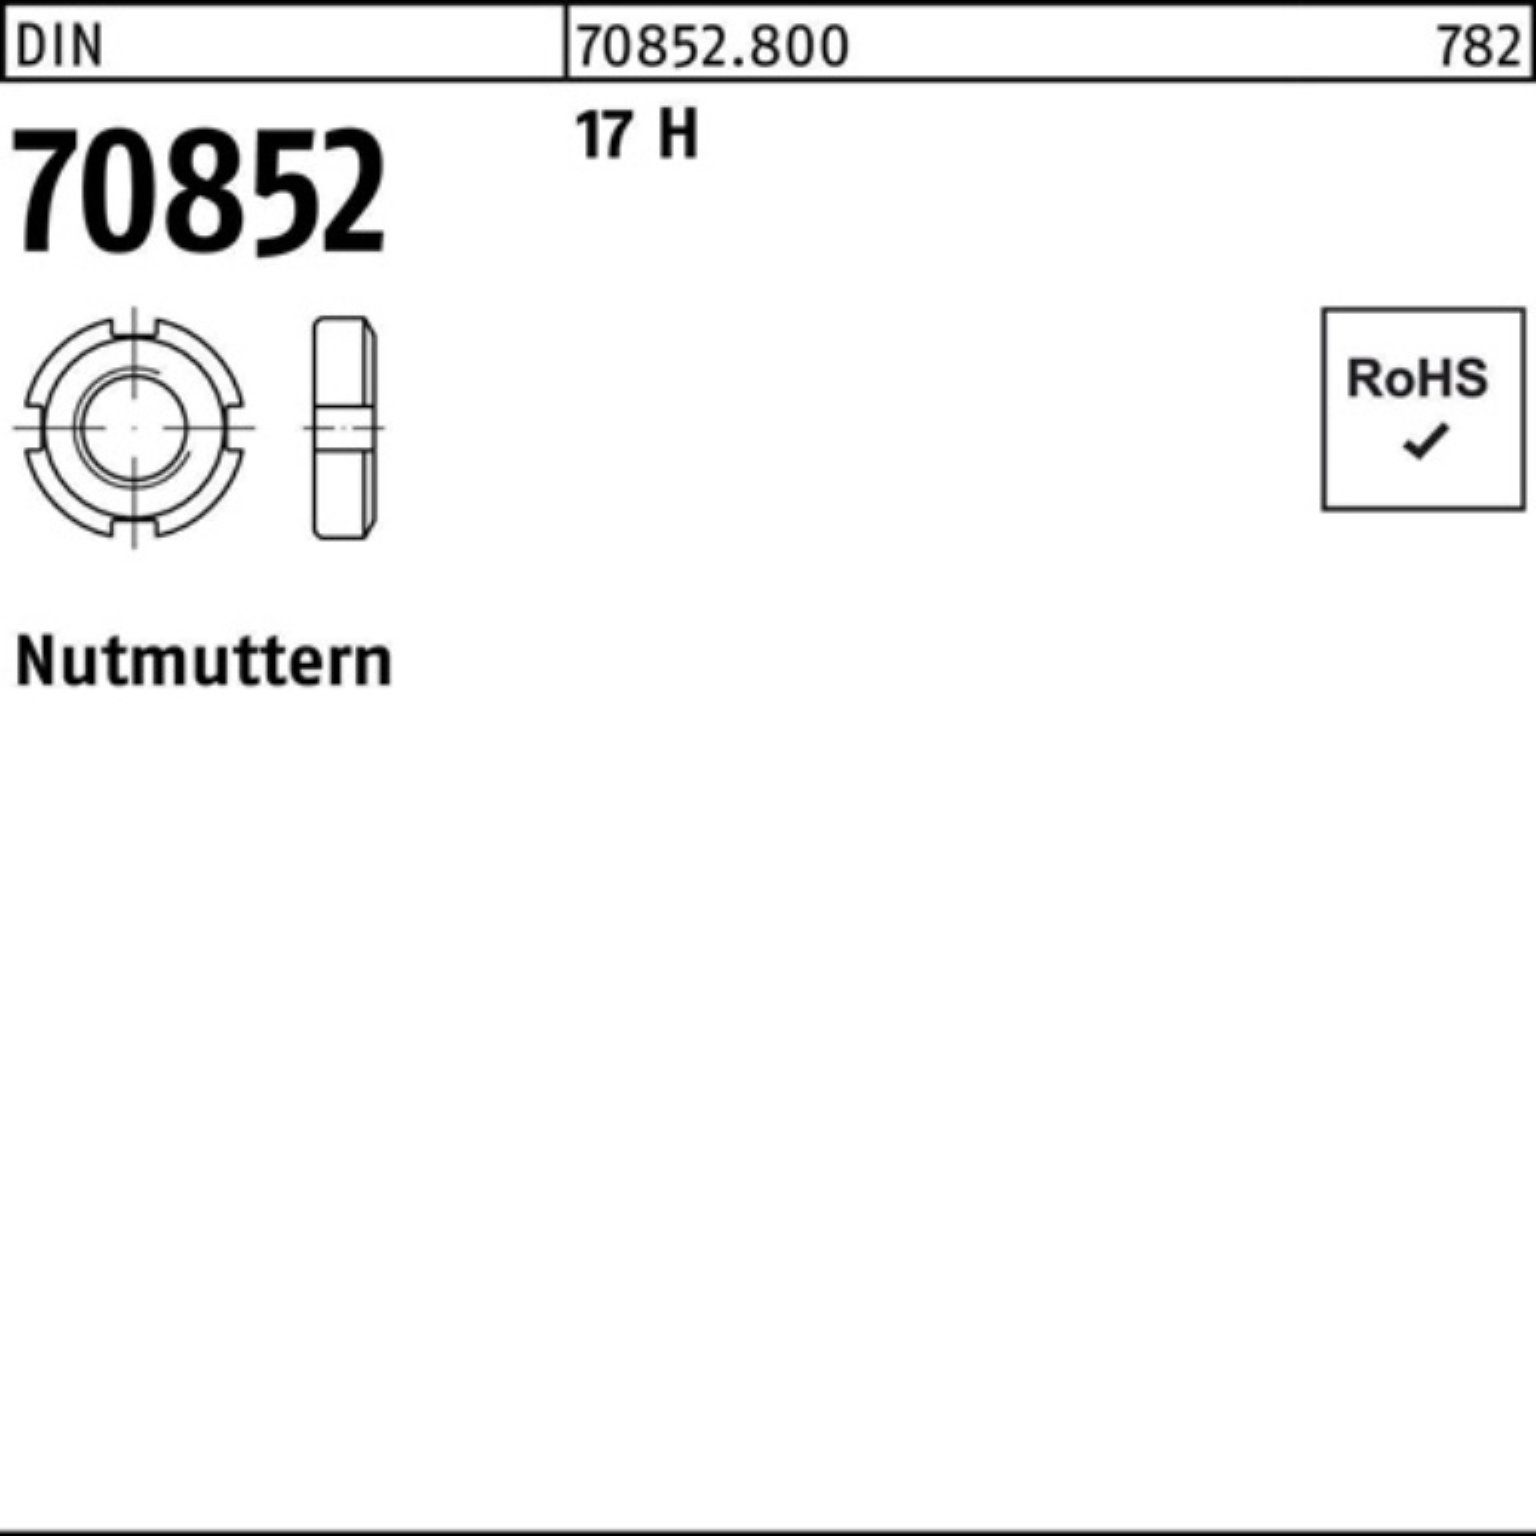 Reyher Nutmutter 100er Pack Nutmutter DIN 70852 M16x 1,5 17 H 25 Stück DIN 70852 17 H